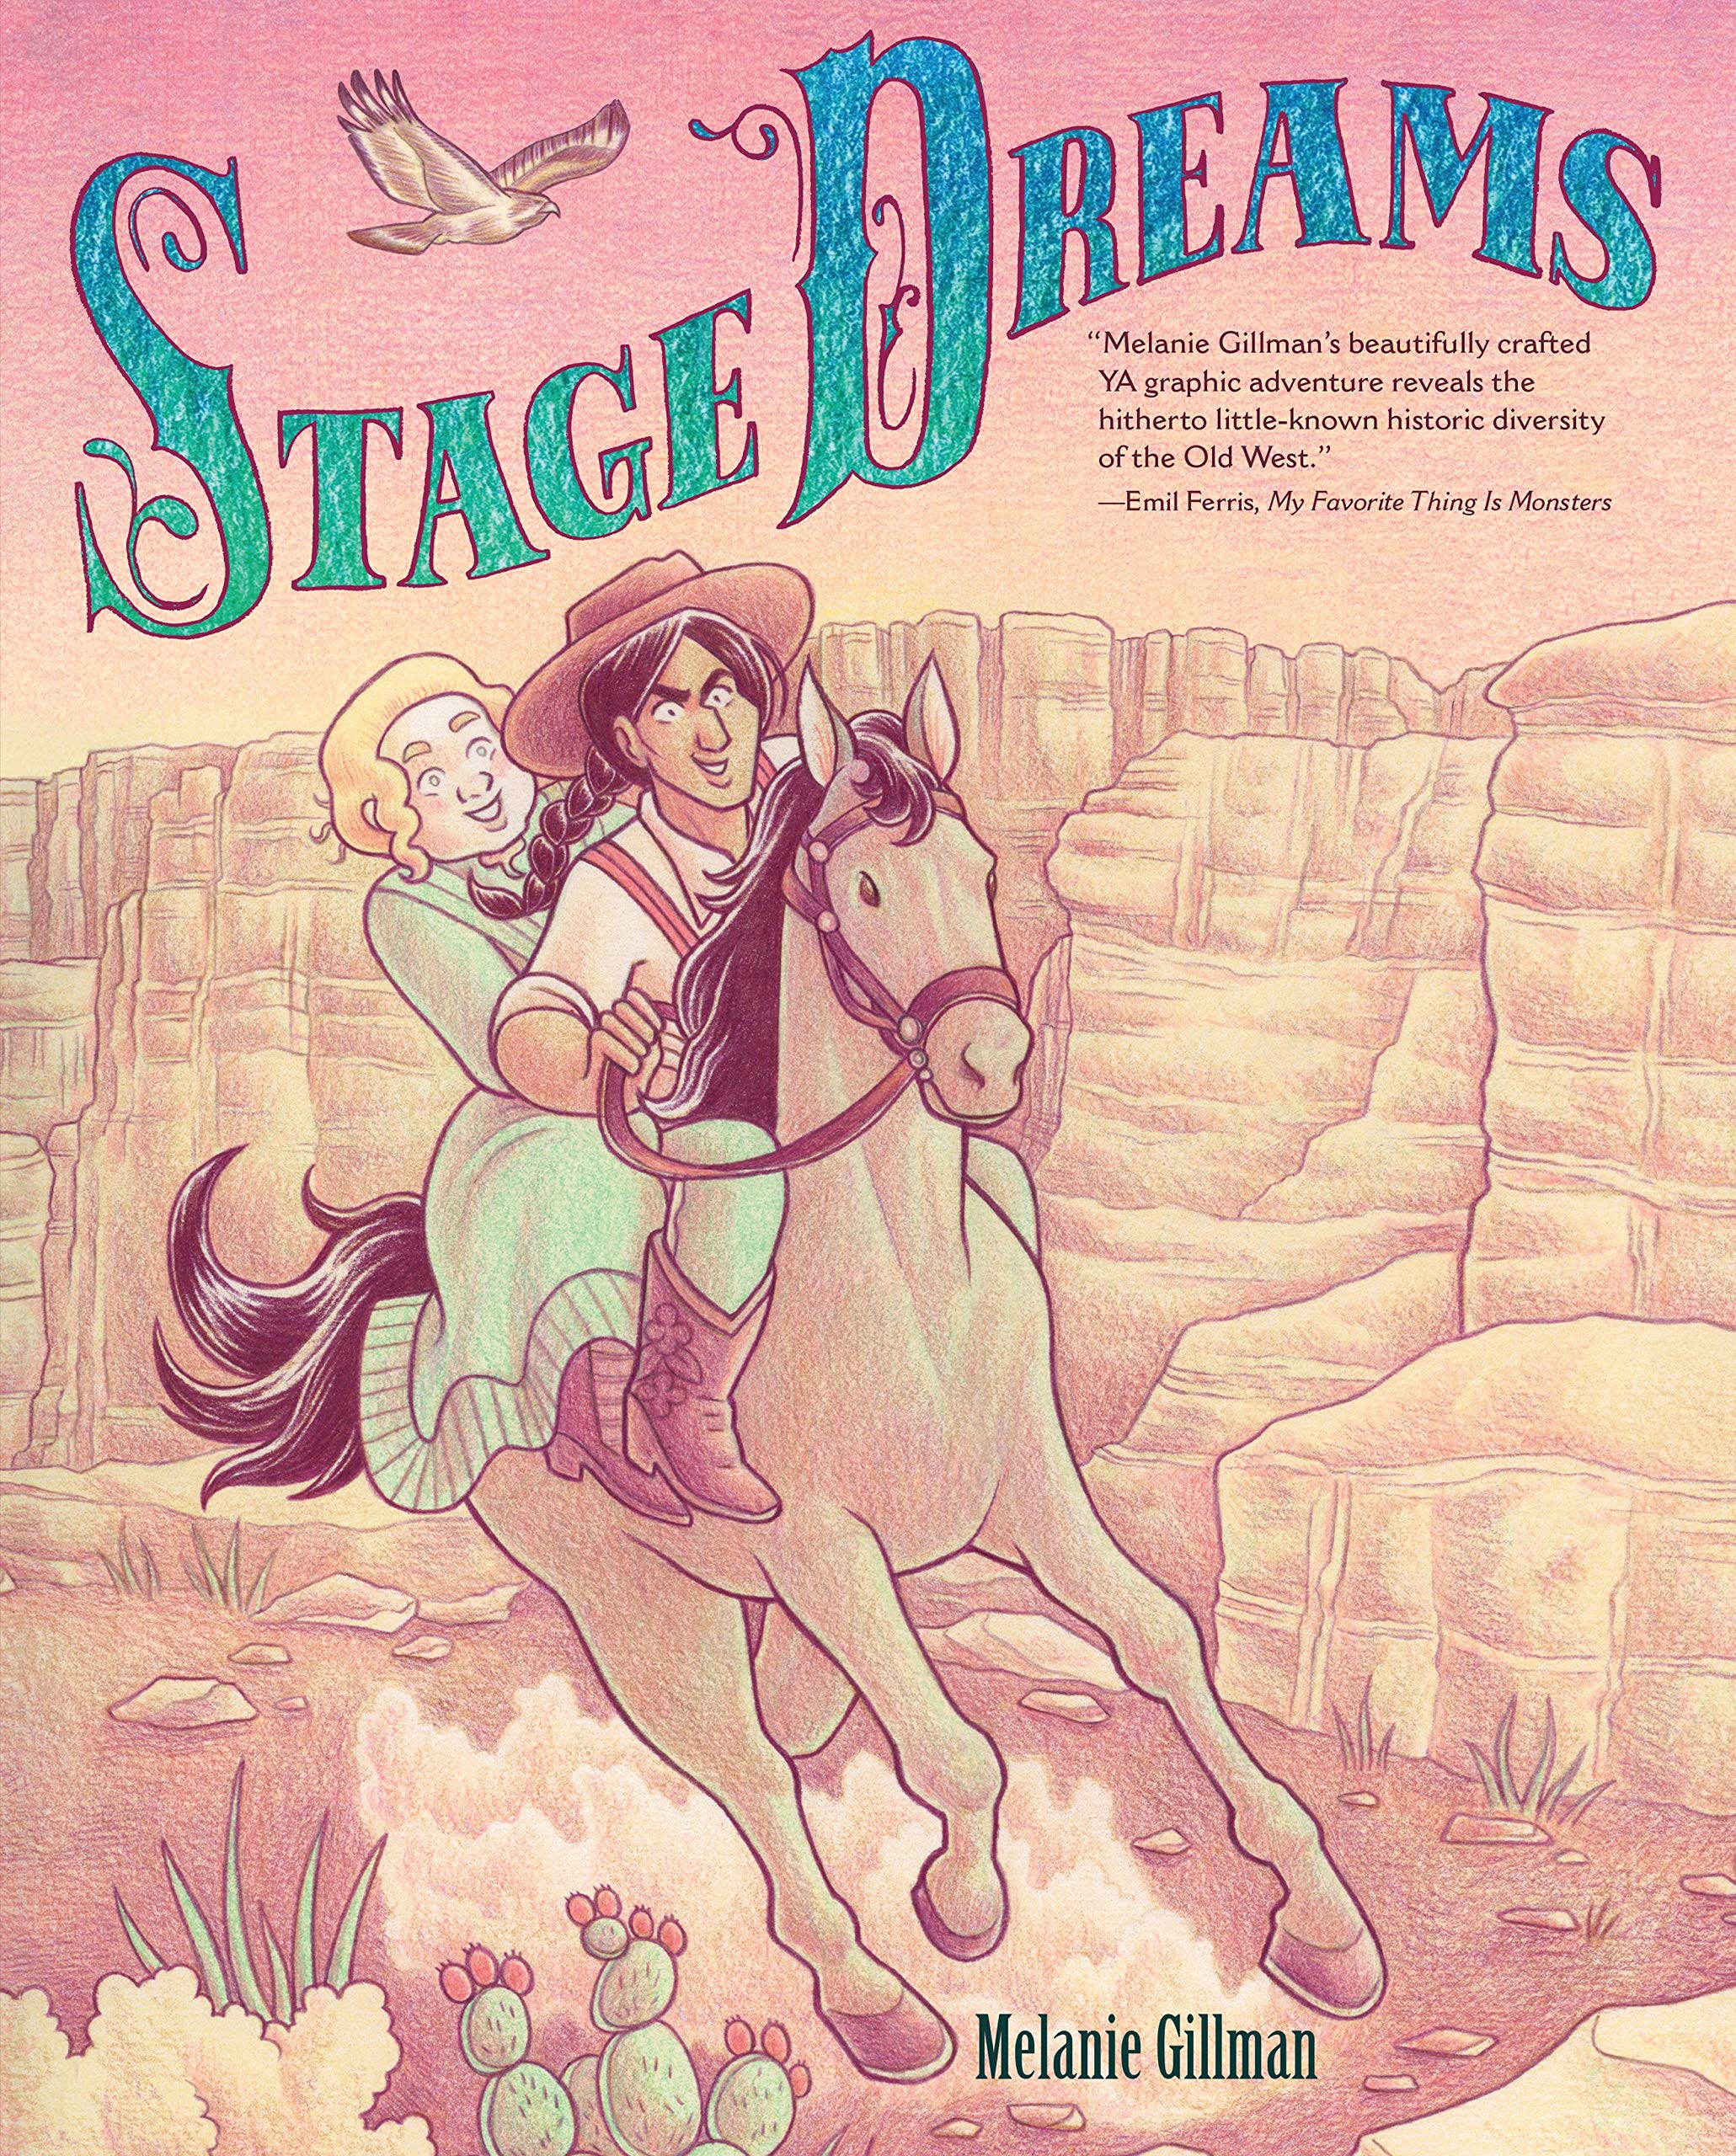 50 queer comics: Stage Dreams